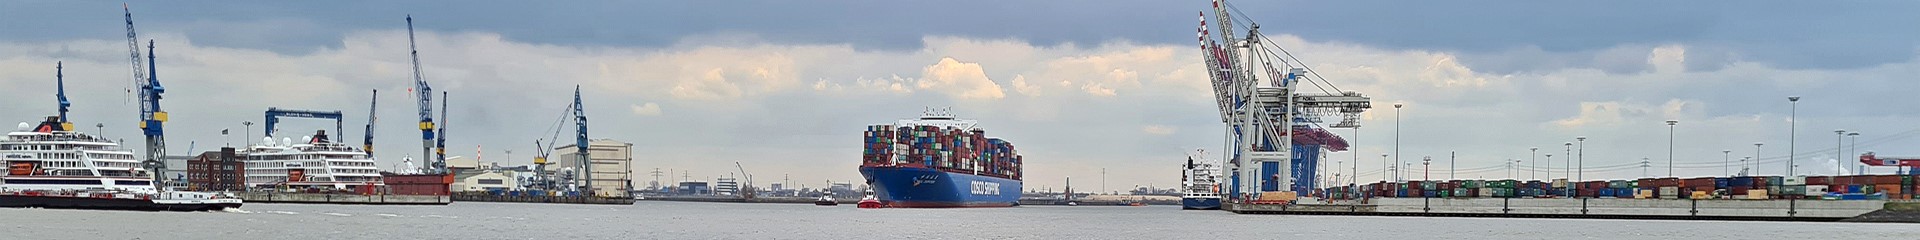 Port of Hamburg with ships (Photo: Jana Friedrich / Hereon)